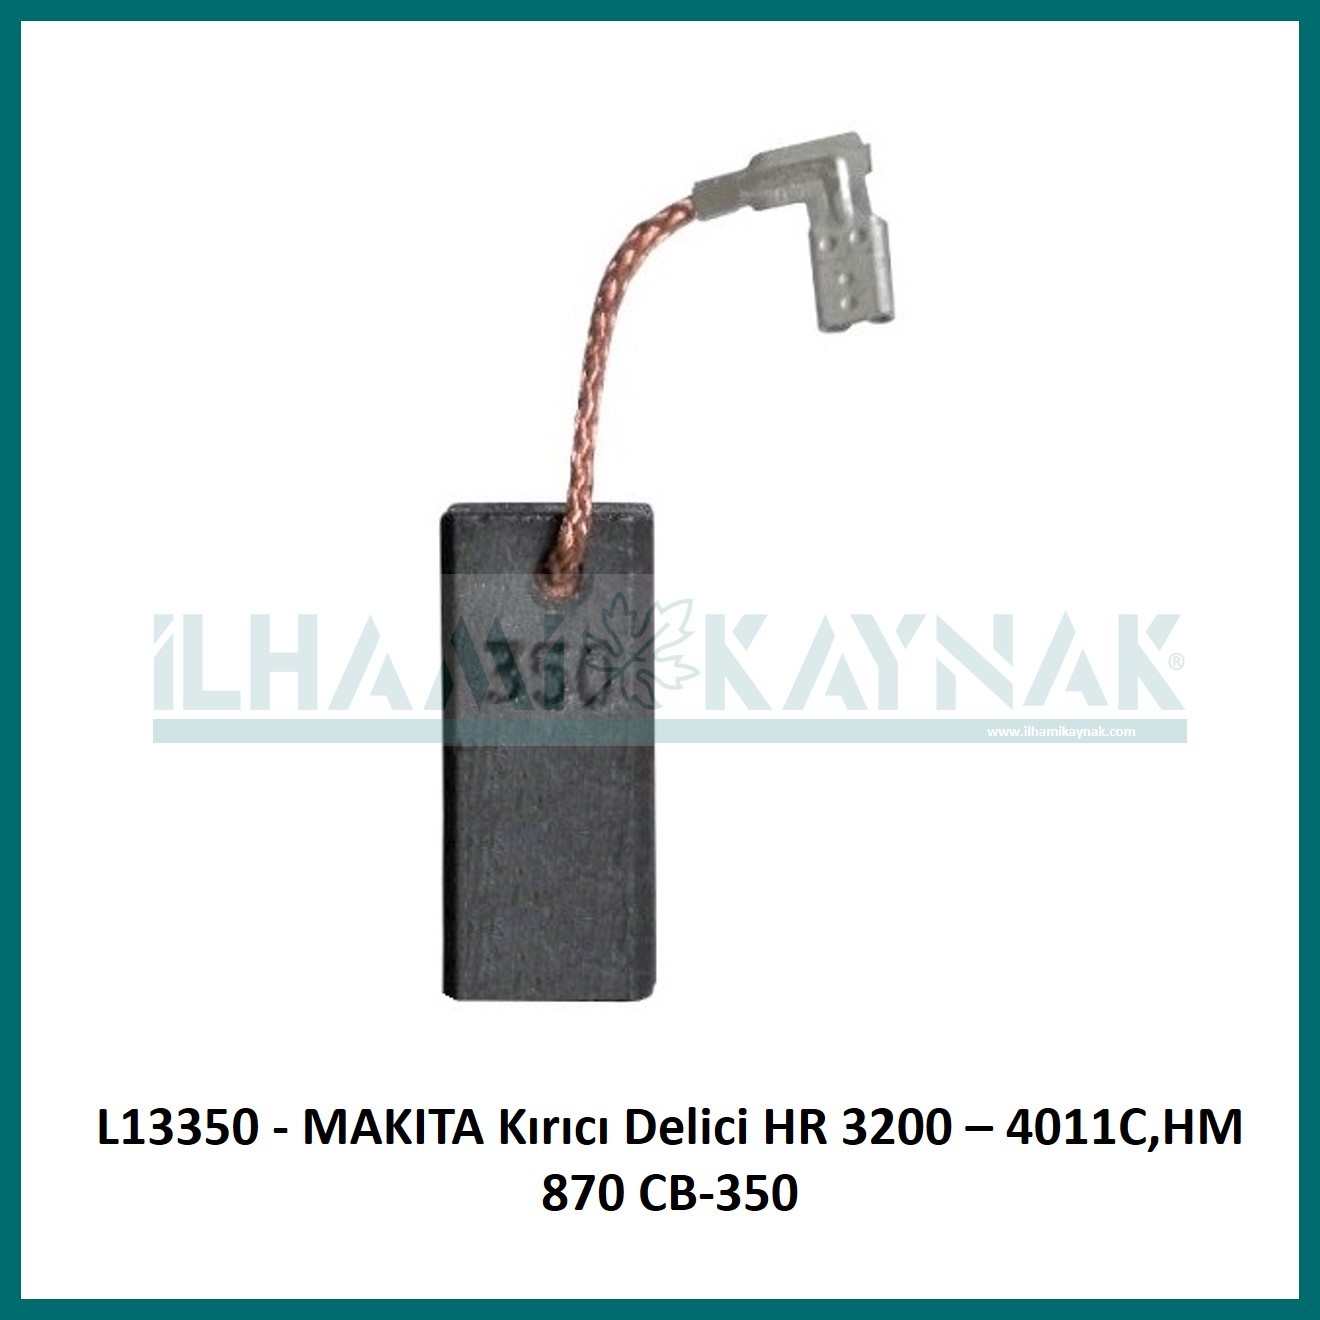 L13350 - MAKITA Kırıcı Delici HR 3200 – 4011C,HM 870 CB-350 - 6.5*11.25 mm - 100 Adet